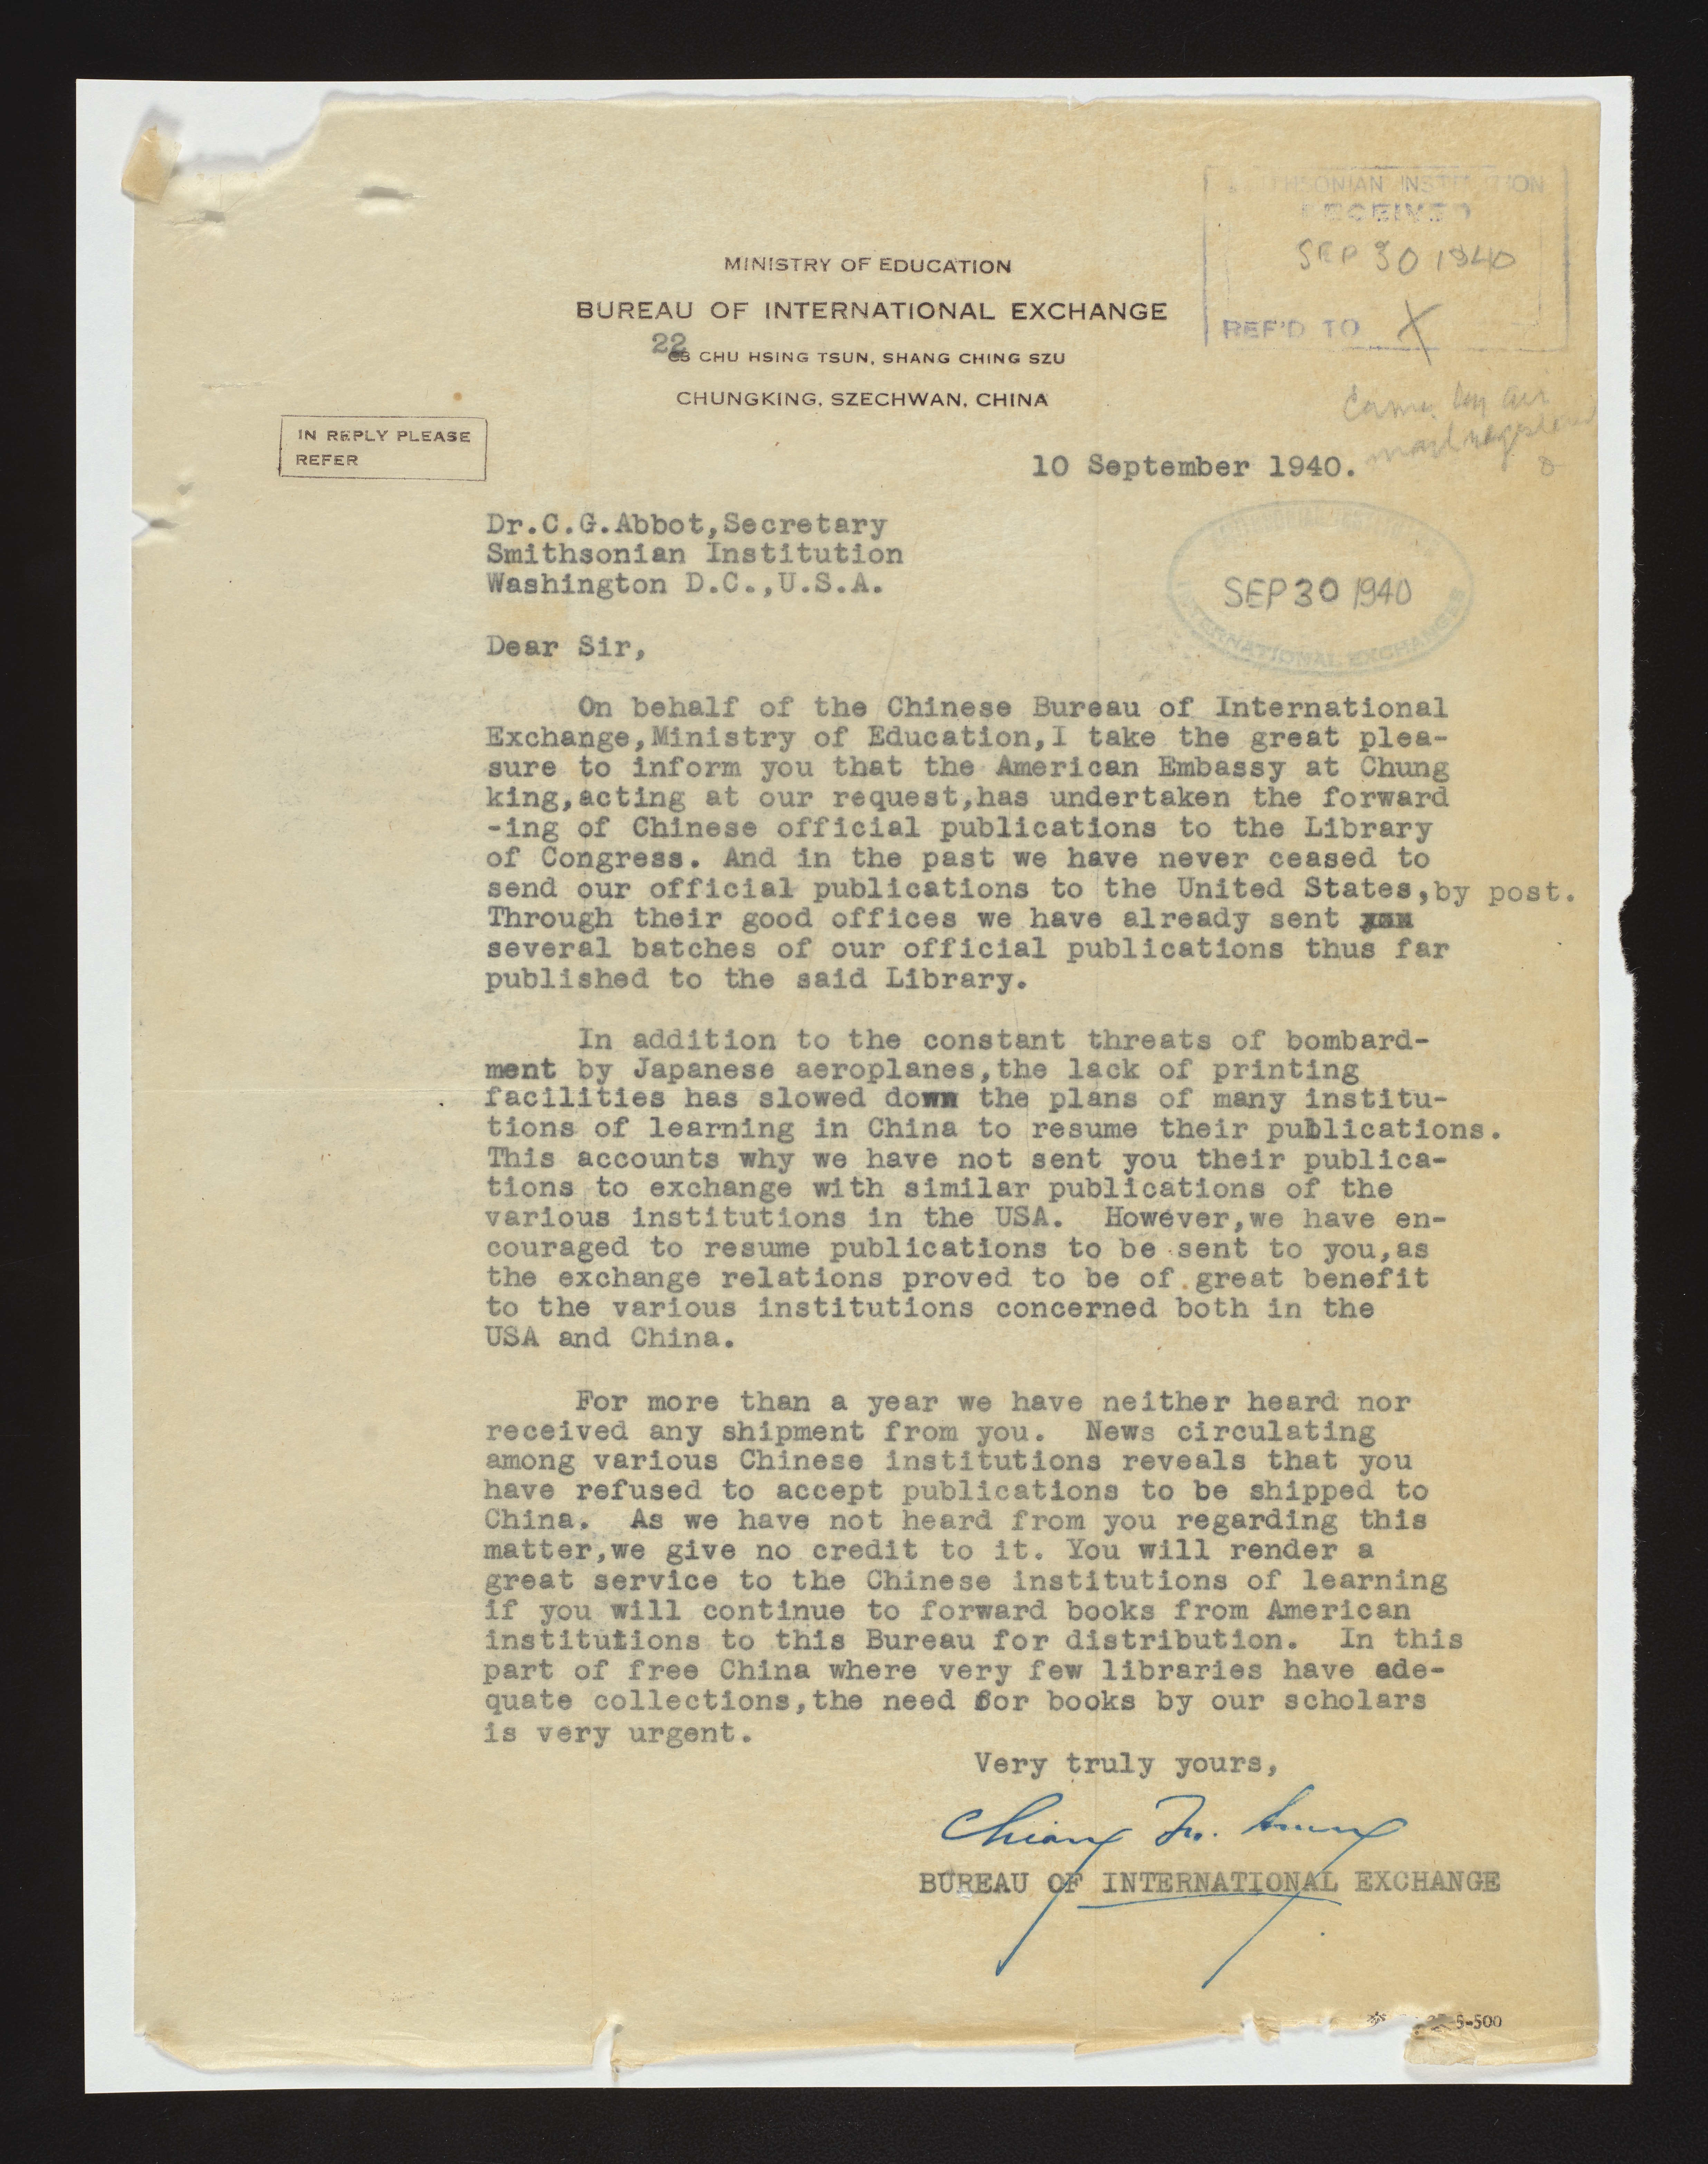 Typewritten letter from Chinese Bureau of International Exchange to Smithsonian Secretary Charles G.